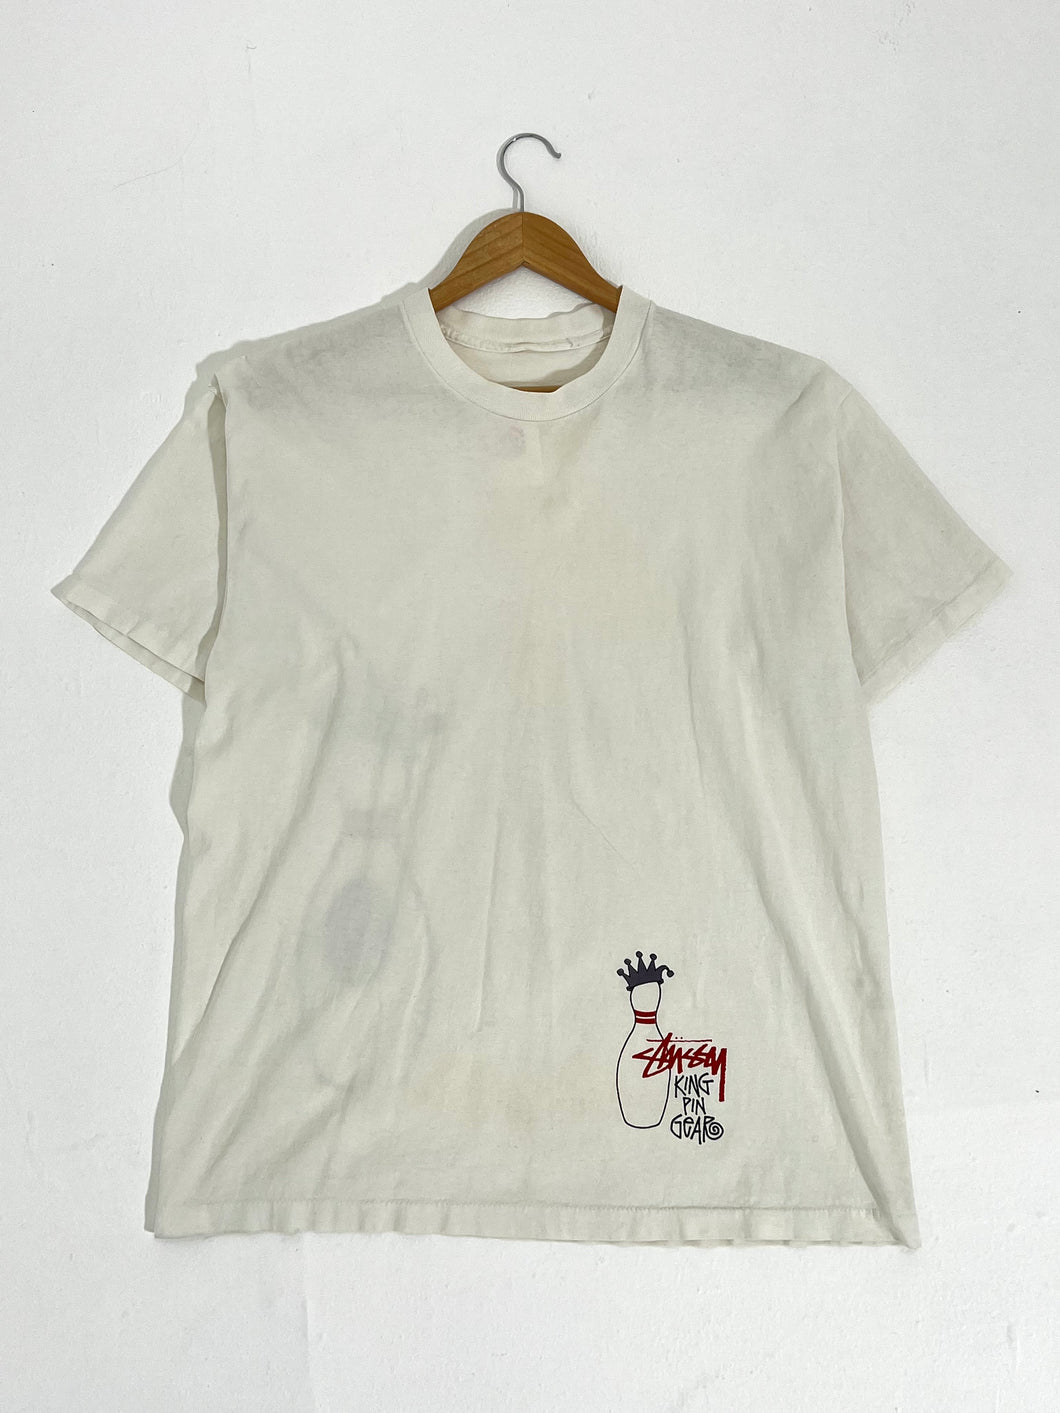 Pin on Vintage T-shirts